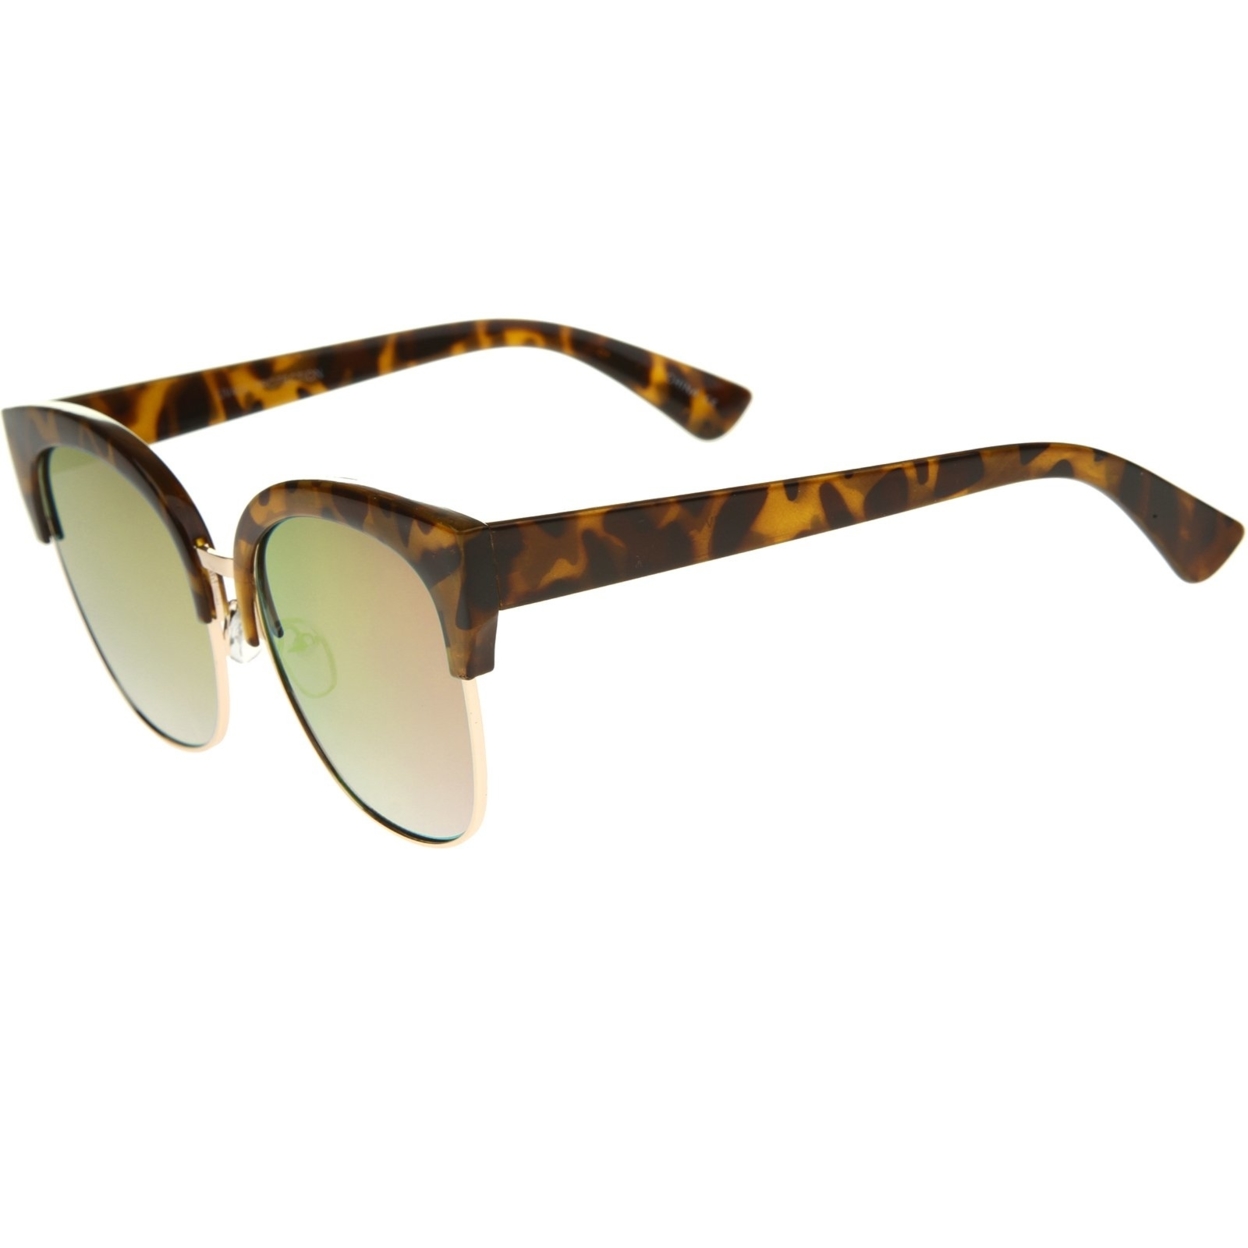 Modern Oversized Half-Frame Color Mirror Flat Lens Cat Eye Sunglasses 58mm - Tortoise / Pink Mirror